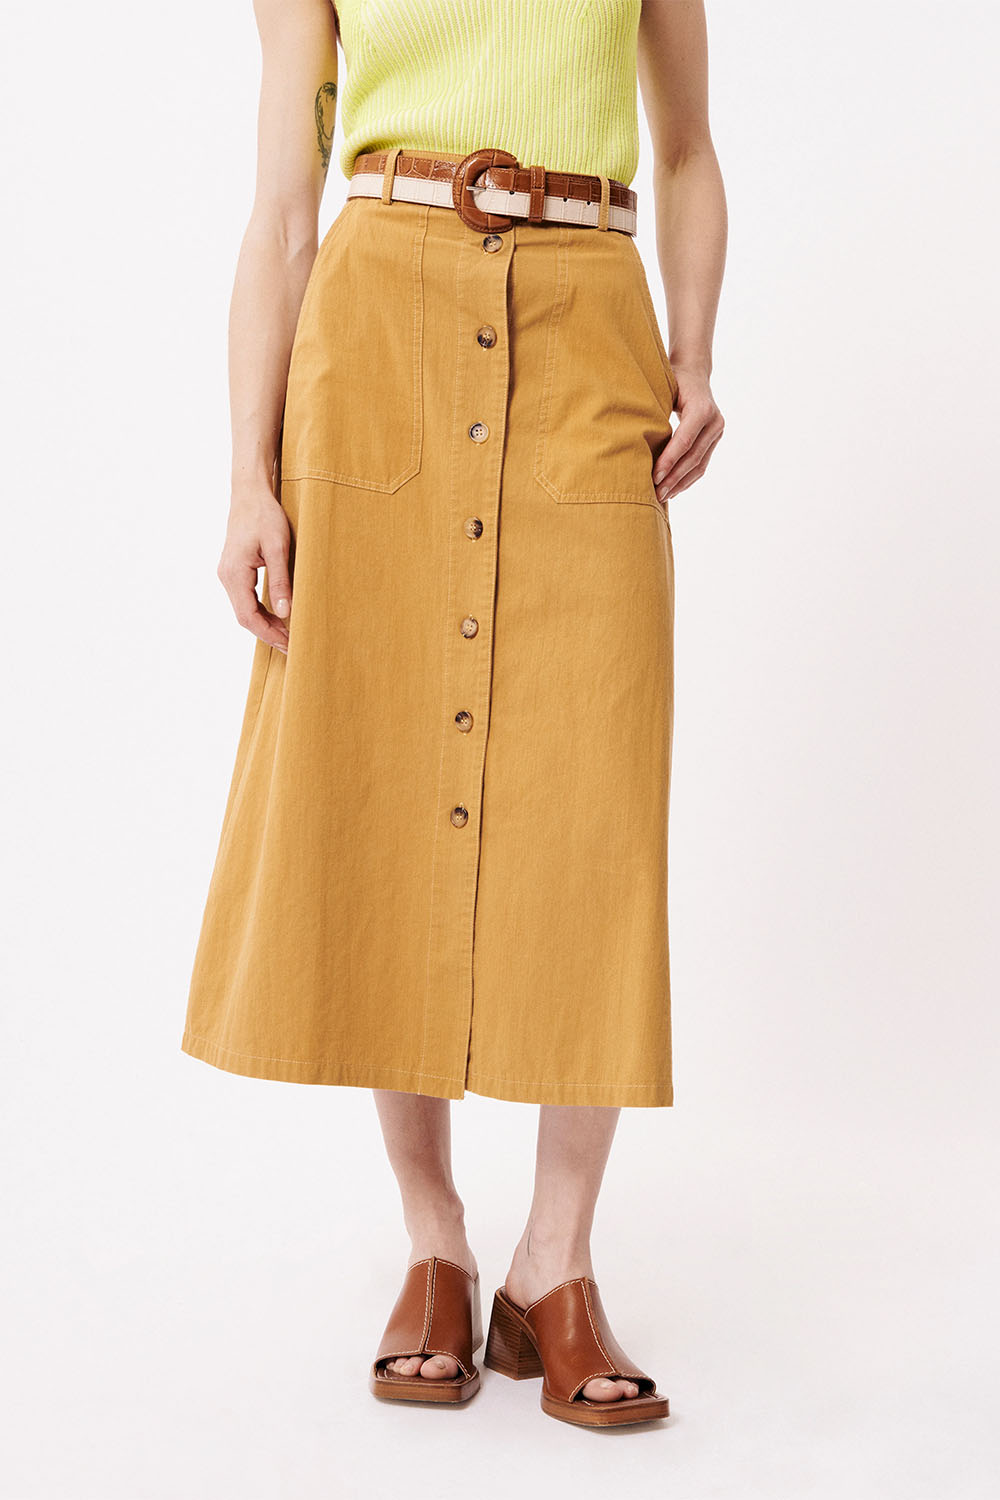 FRNCH - Pinar Skirt - Beige - Detail